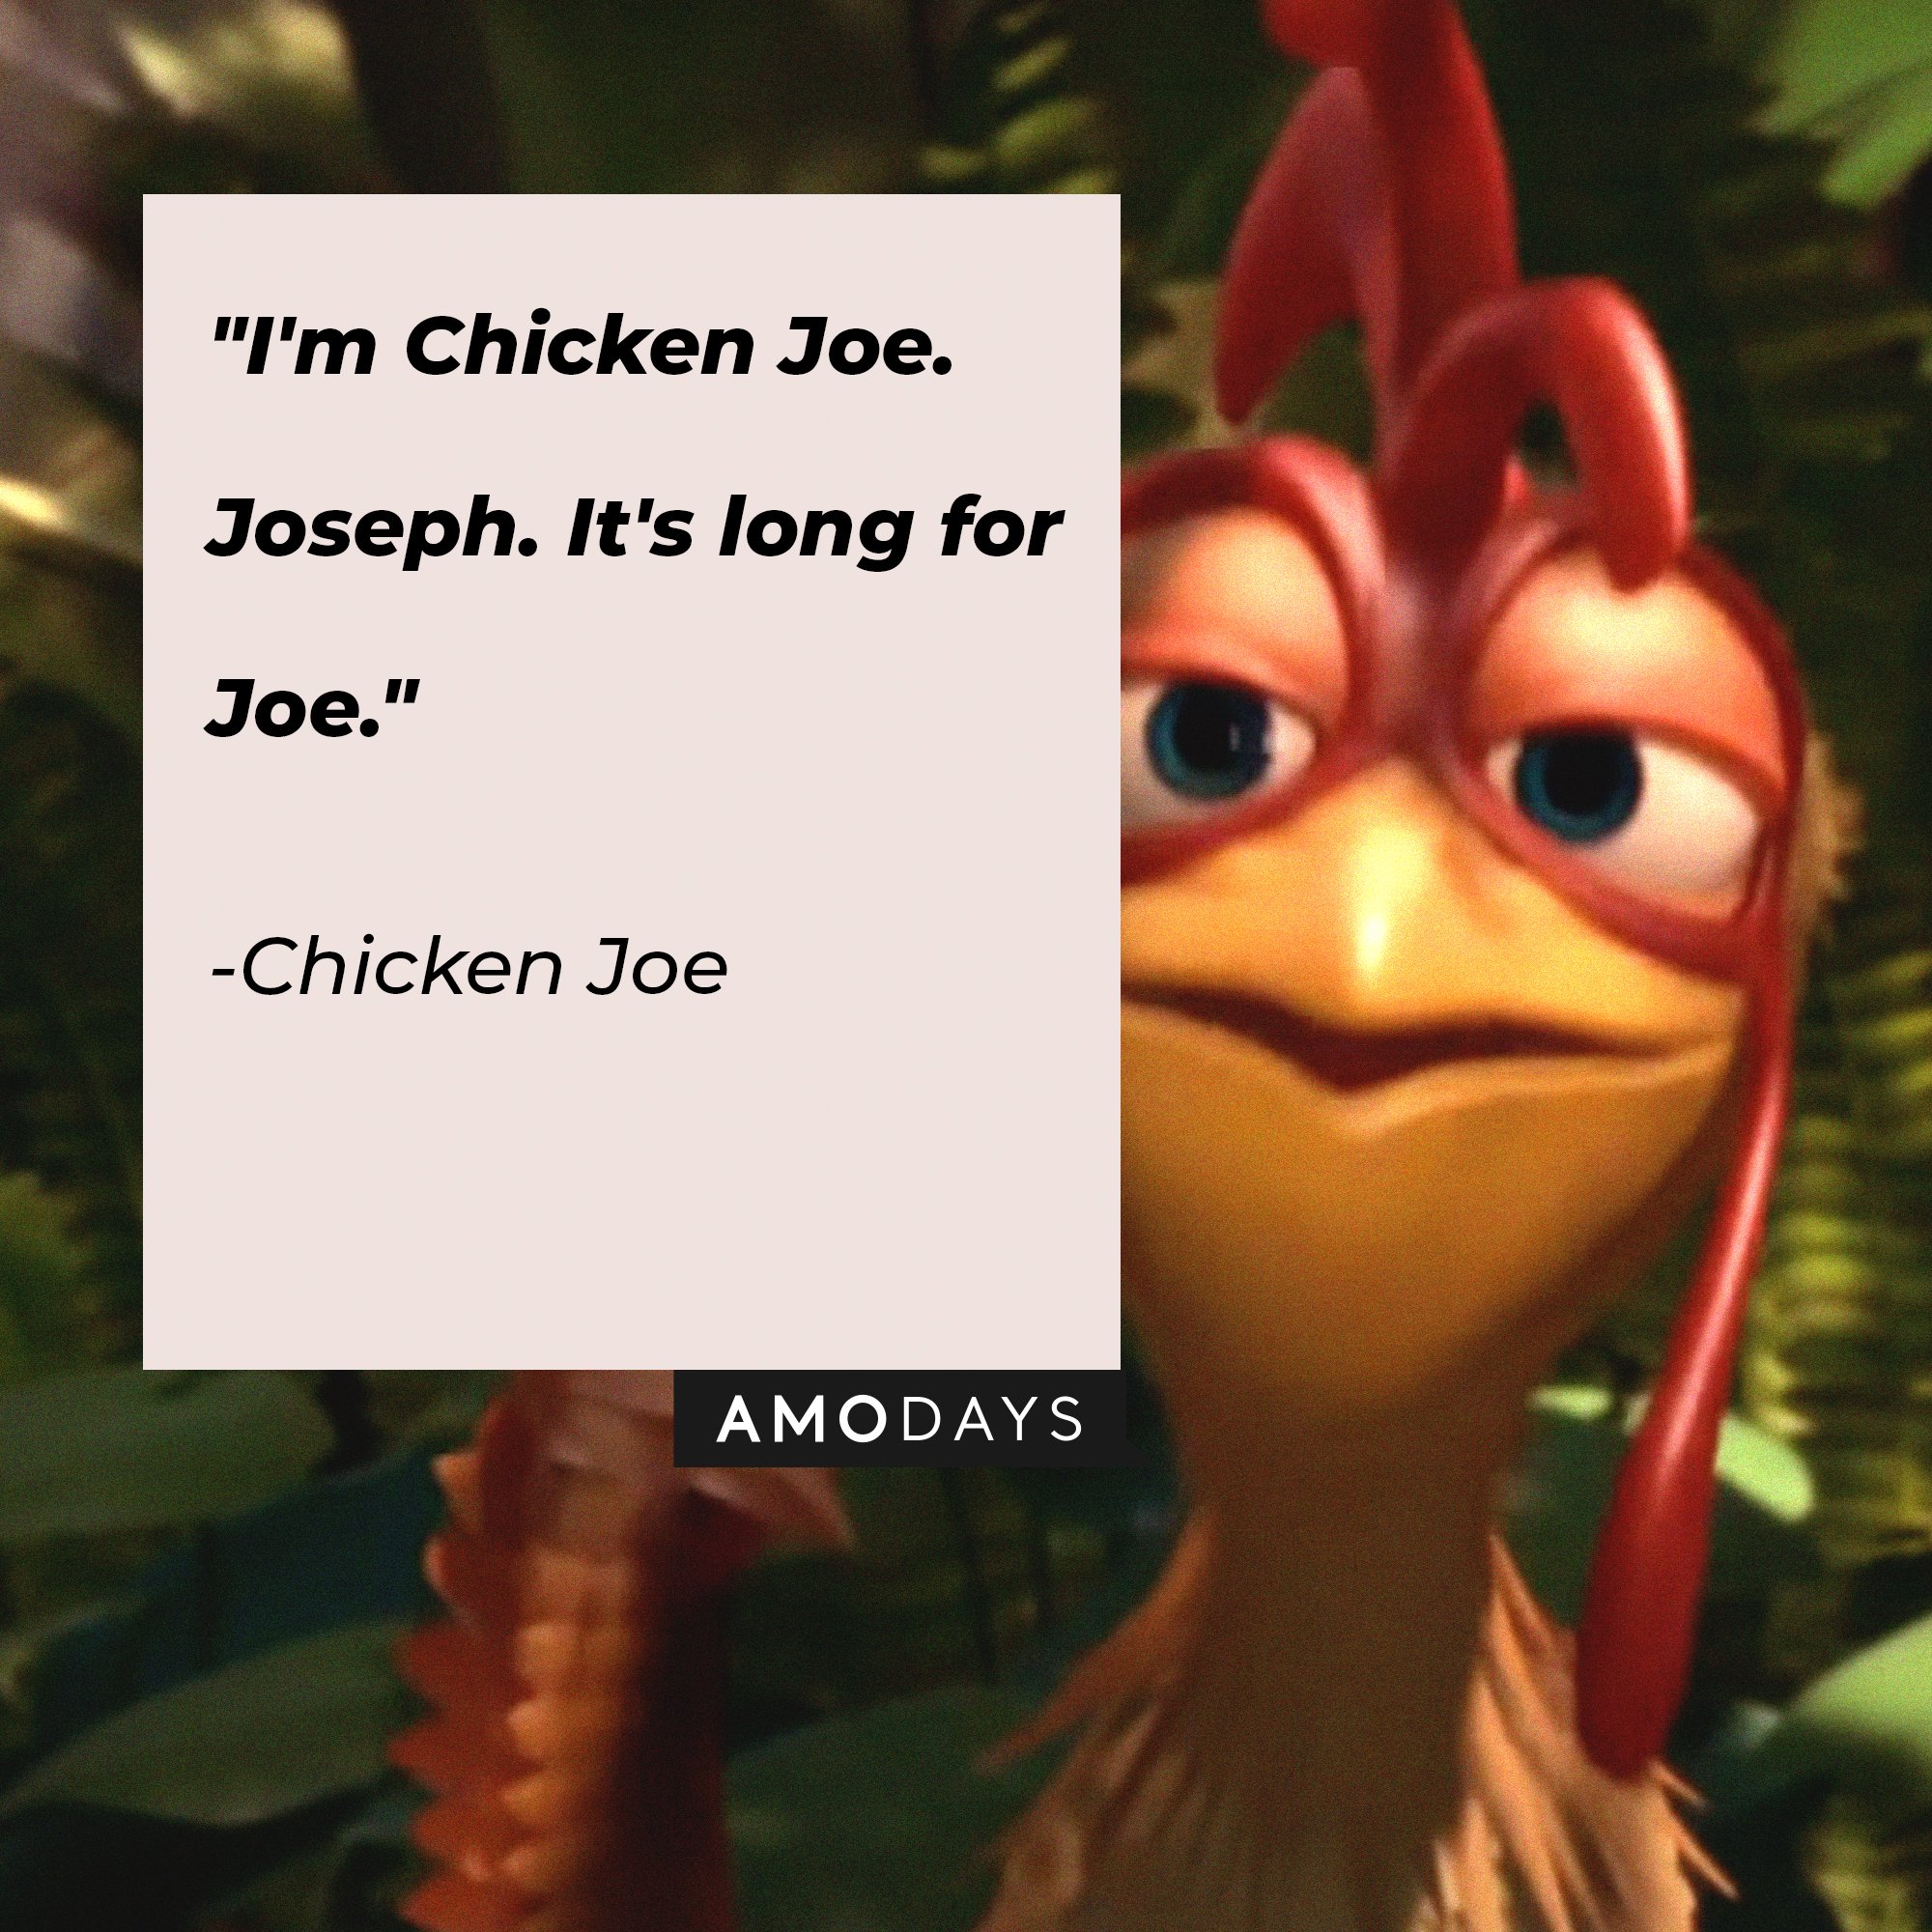 Chicken Joe's quote: "I'm Chicken Joe. Joseph. It's long for Joe." | Image: AmoDays